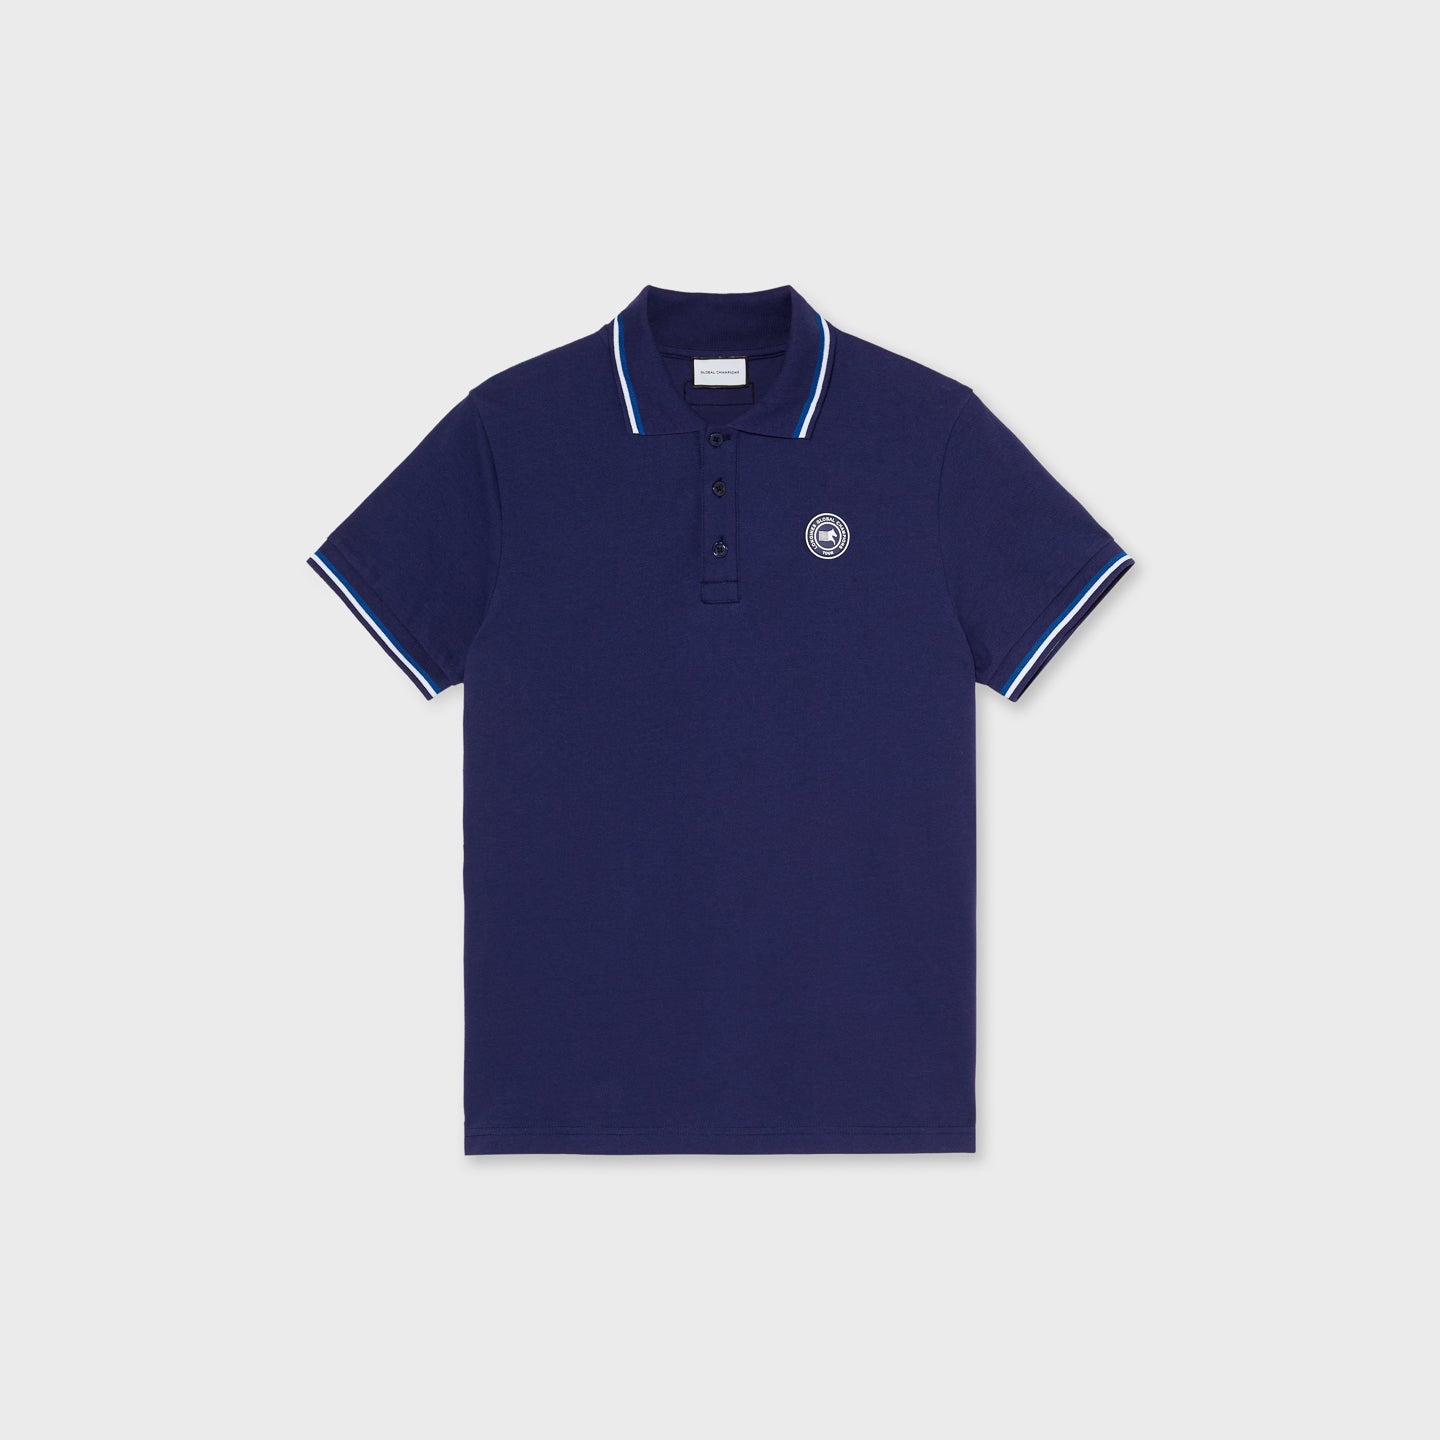 LGCT Premium Unisex Polo-Shirt #2 Navy Blue